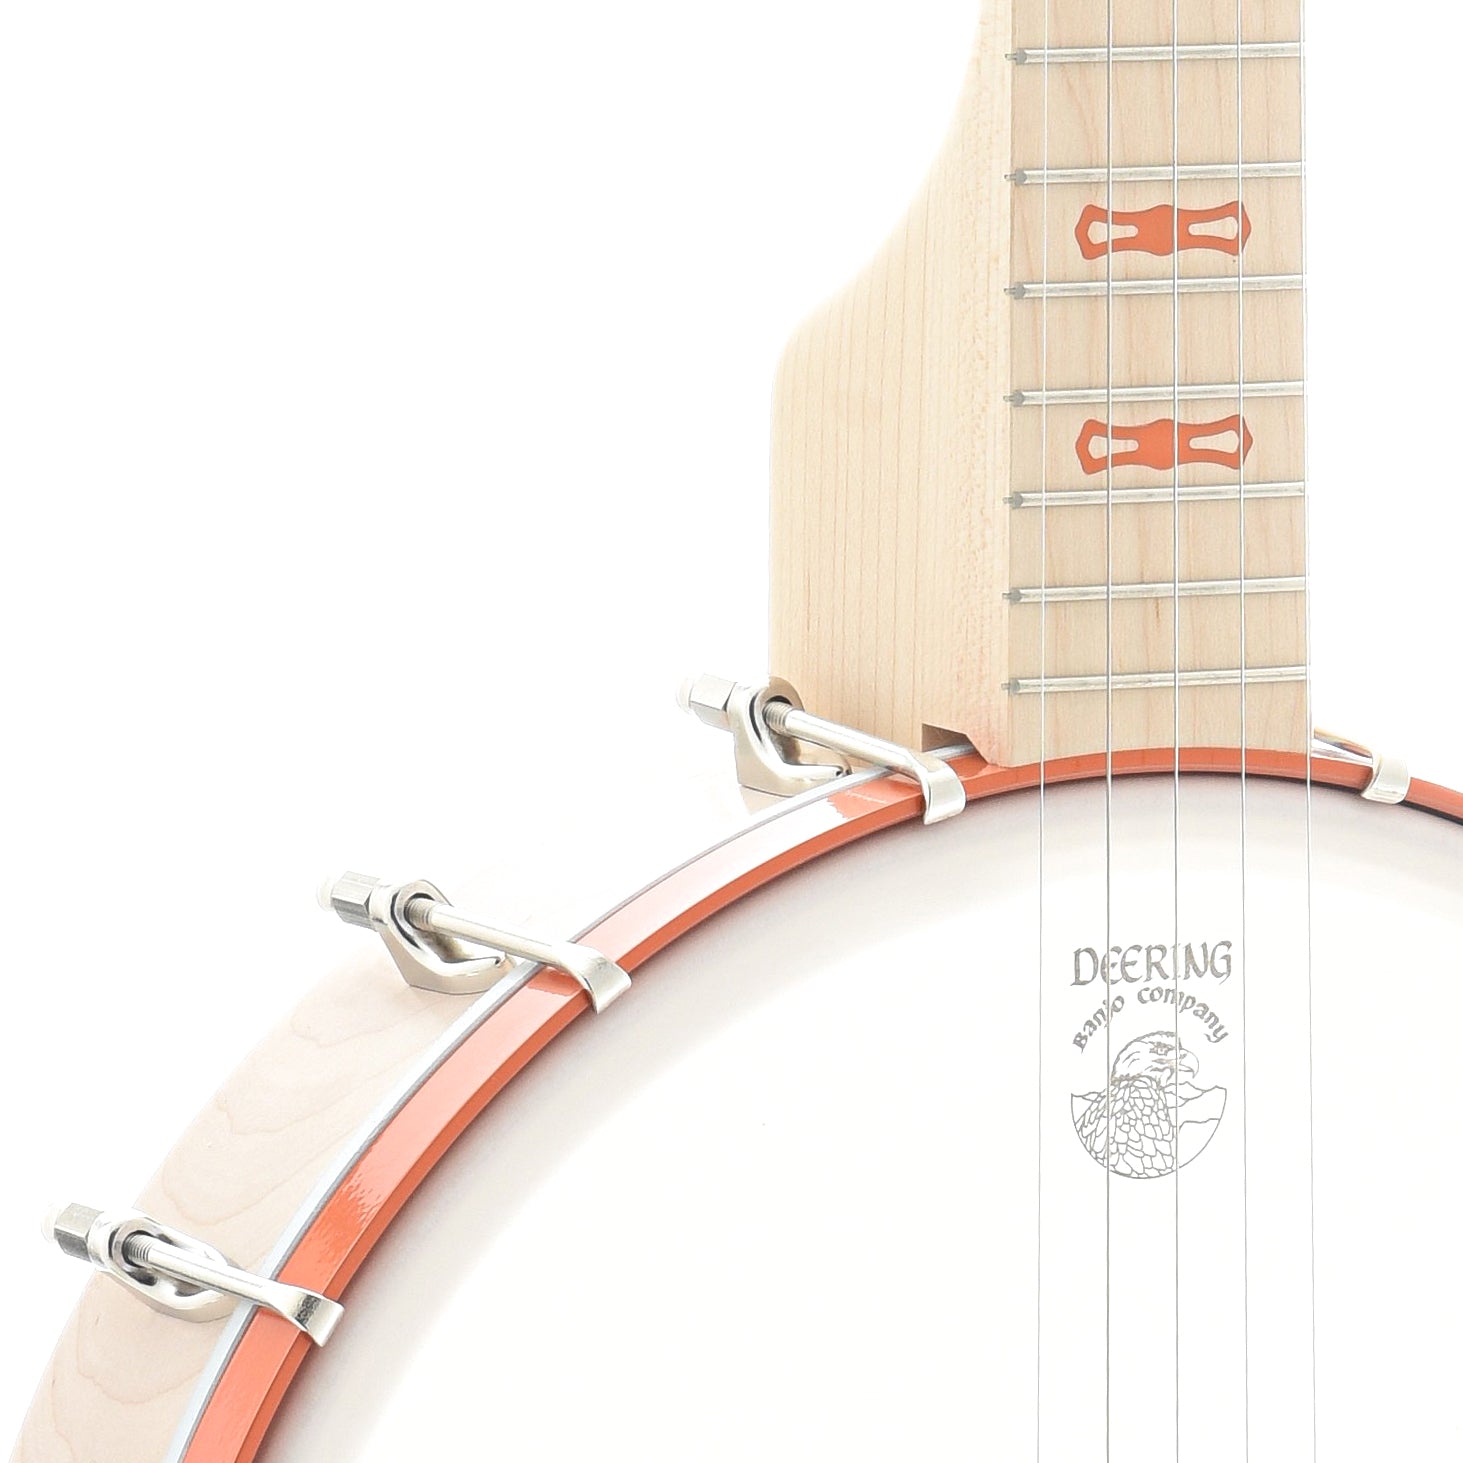 Image 4 of Deering Goodtime Junior, Chevy Orange - SKU# GOODJR-OR : Product Type Other : Elderly Instruments